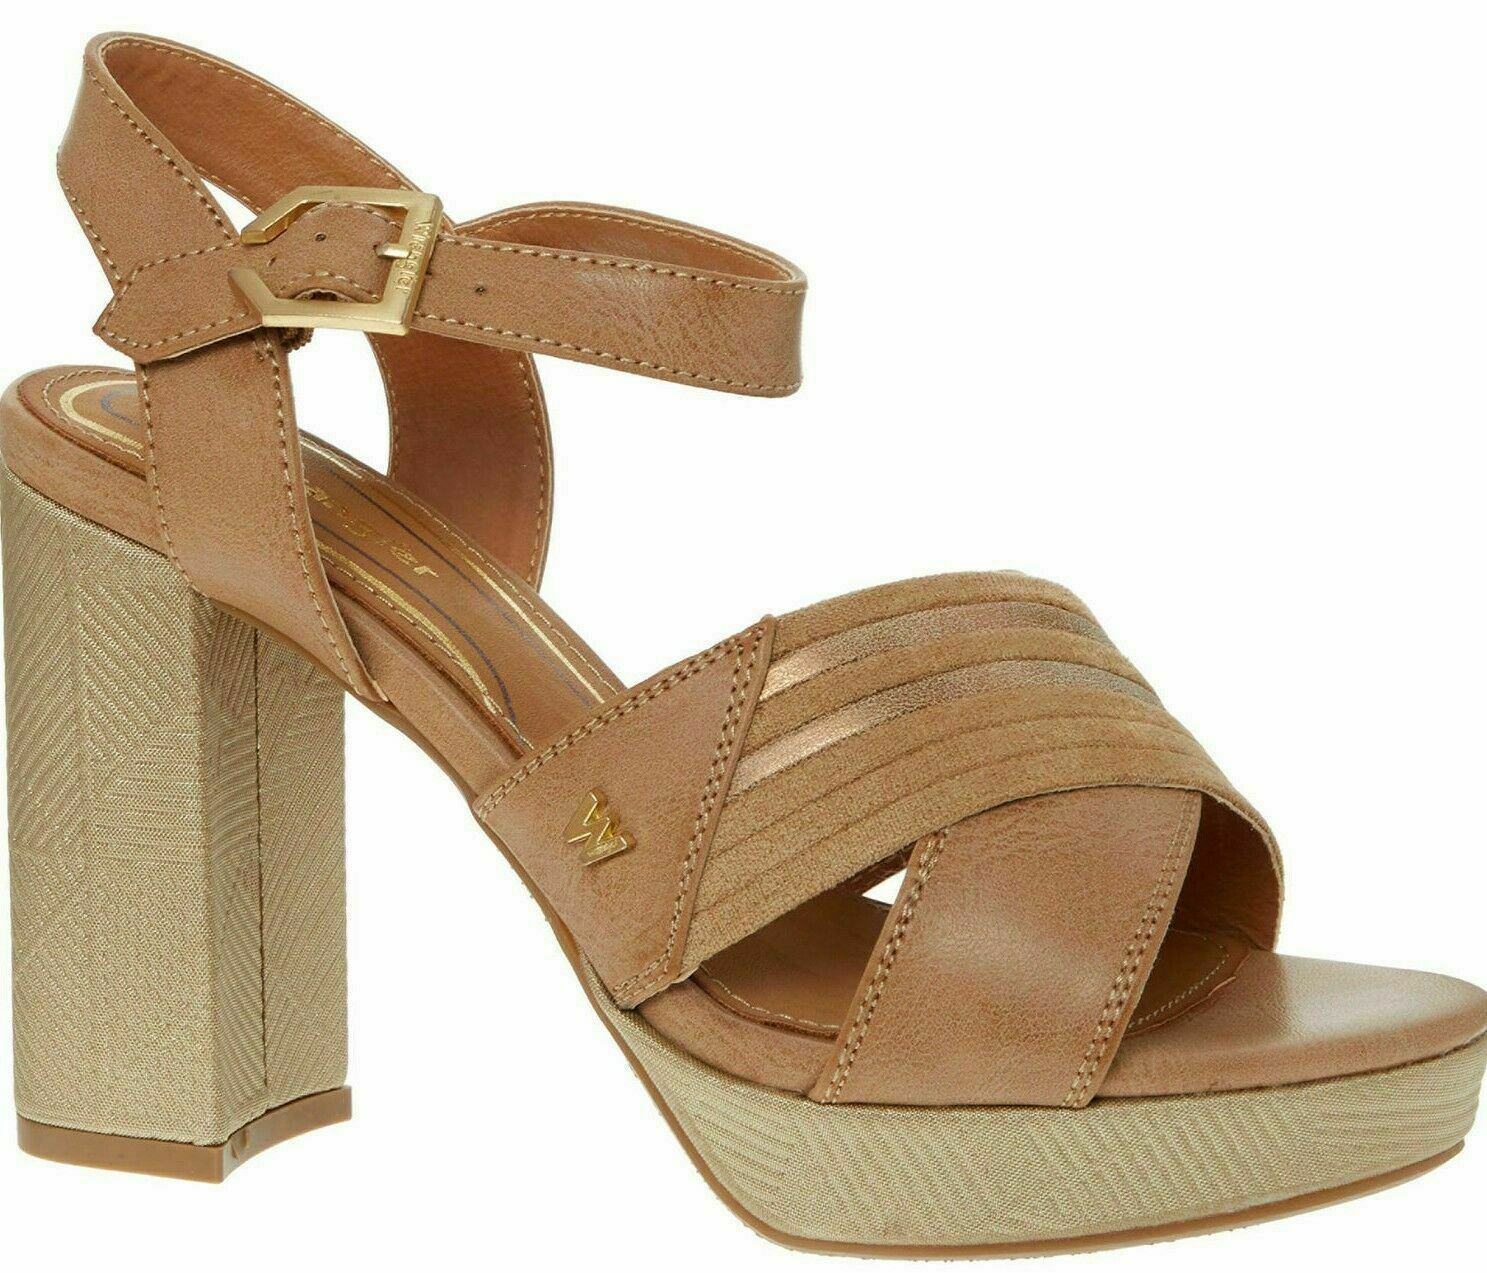 WRANGLER Women's THALIA BLONDIE Heels Sandals, Colour Sand, size UK 5